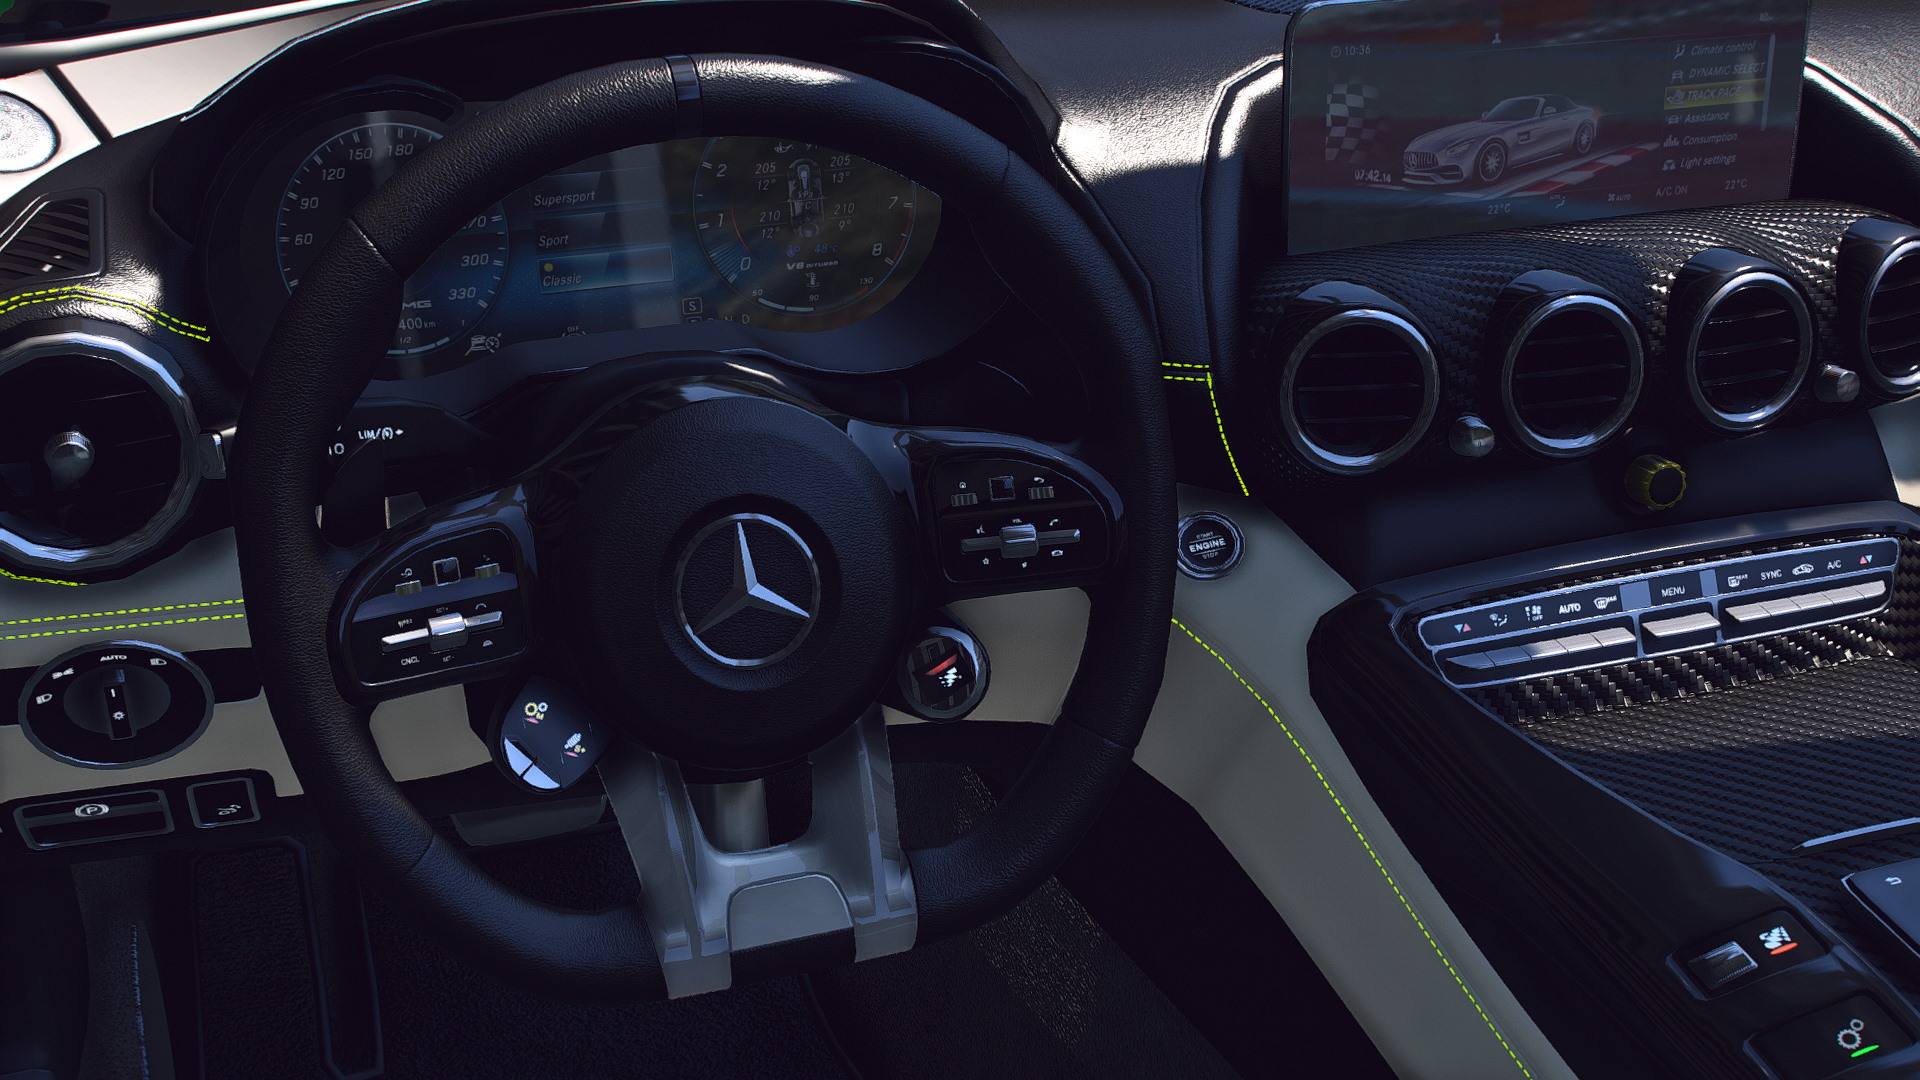 Mercedes Benz GT R 2021 interior